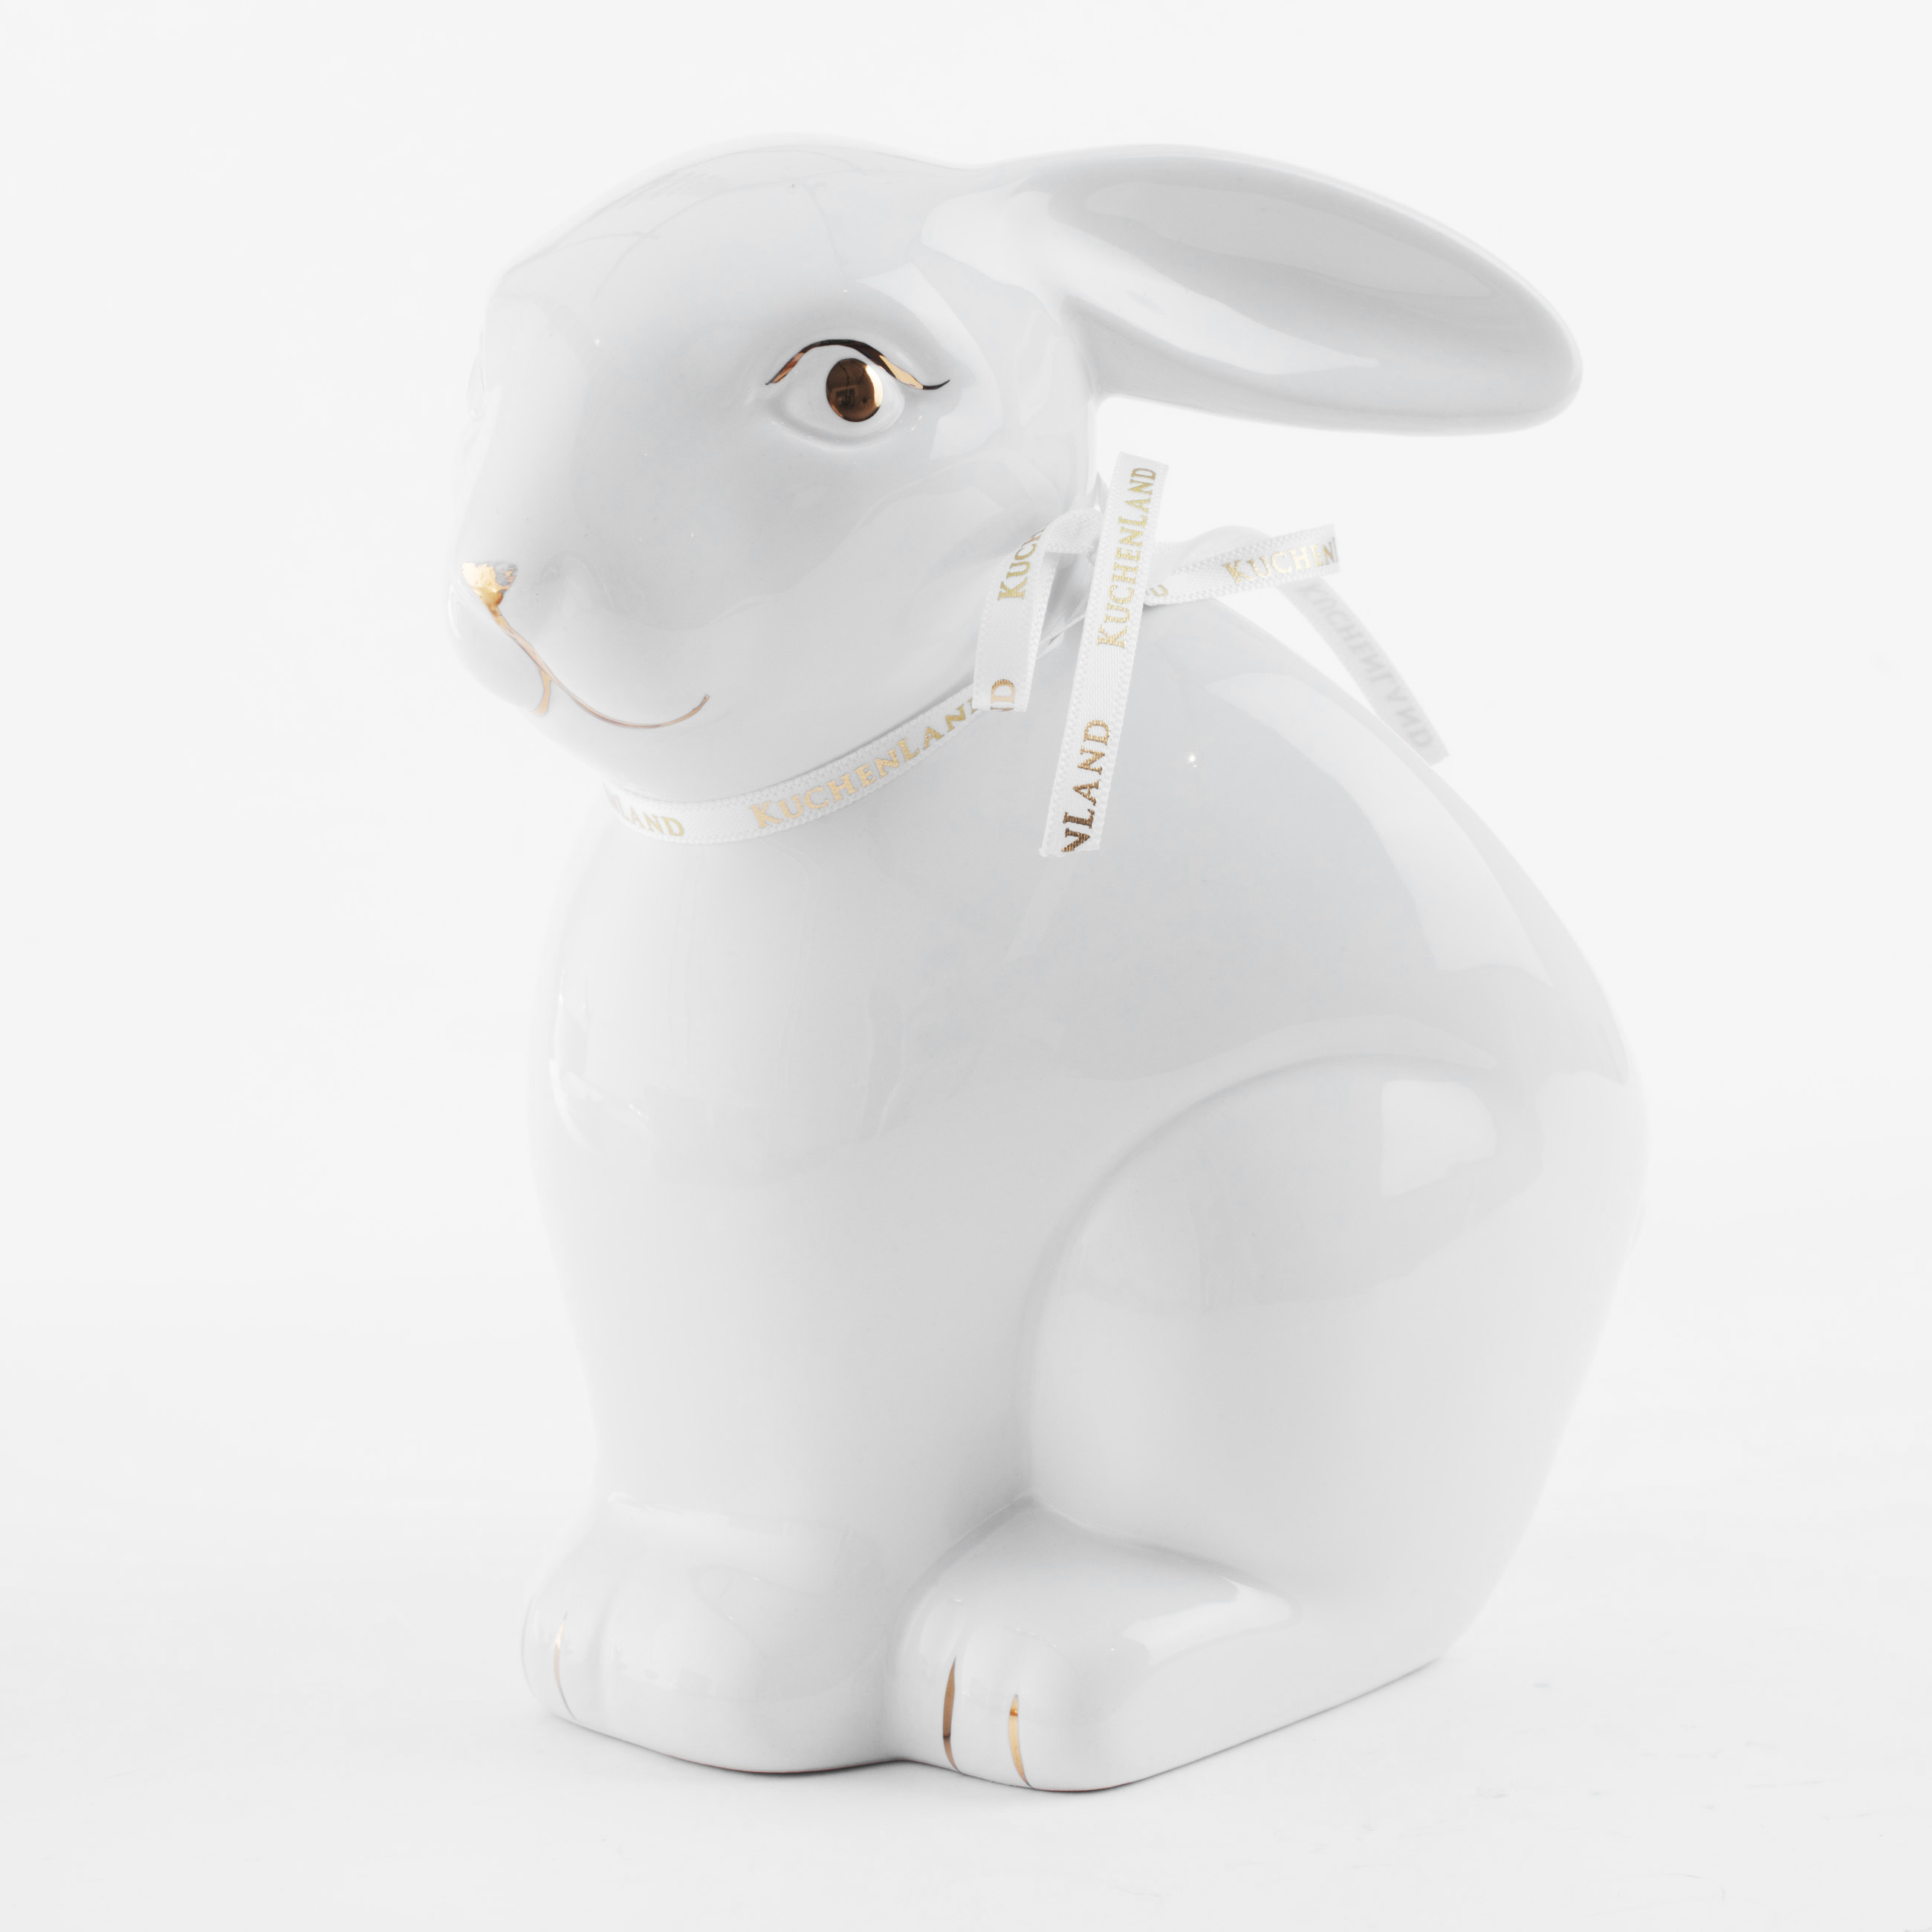 Конфетница, 17х17 см, керамика, белая, Кролик, Easter gold